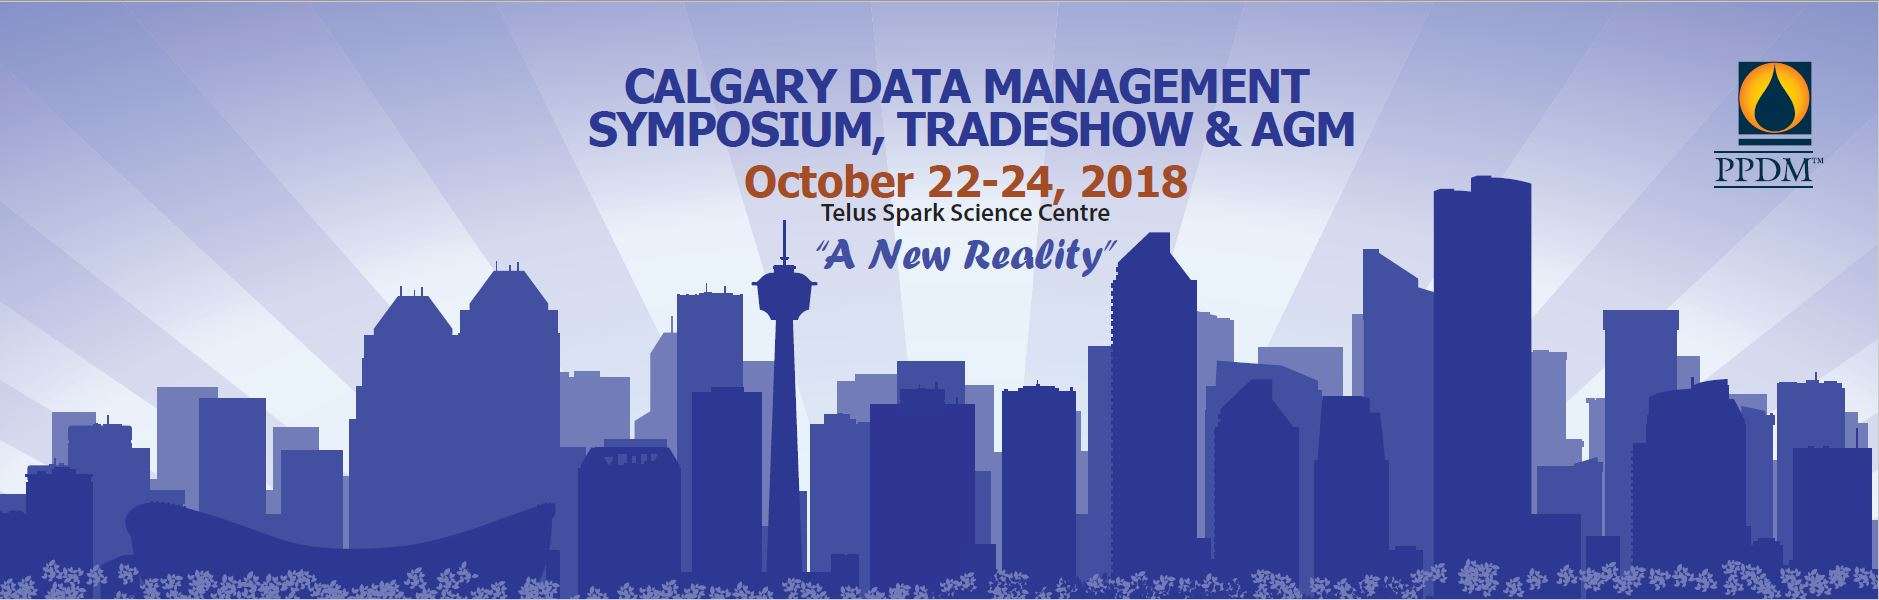 PPDM Data Management Symposium 2018